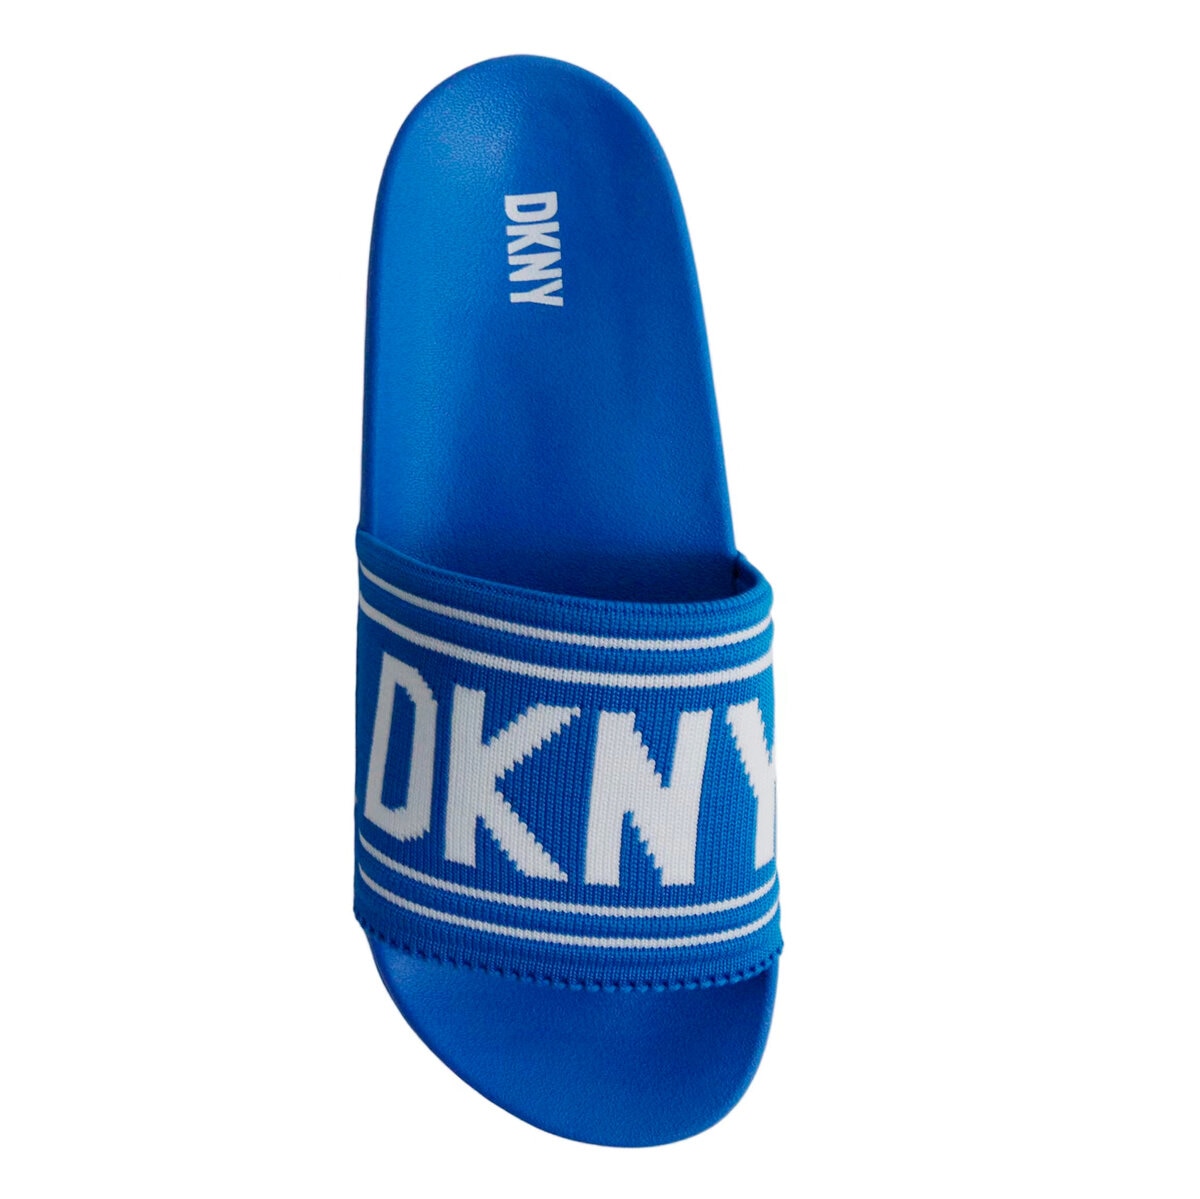 DKNY Sandalia para Dama Azul